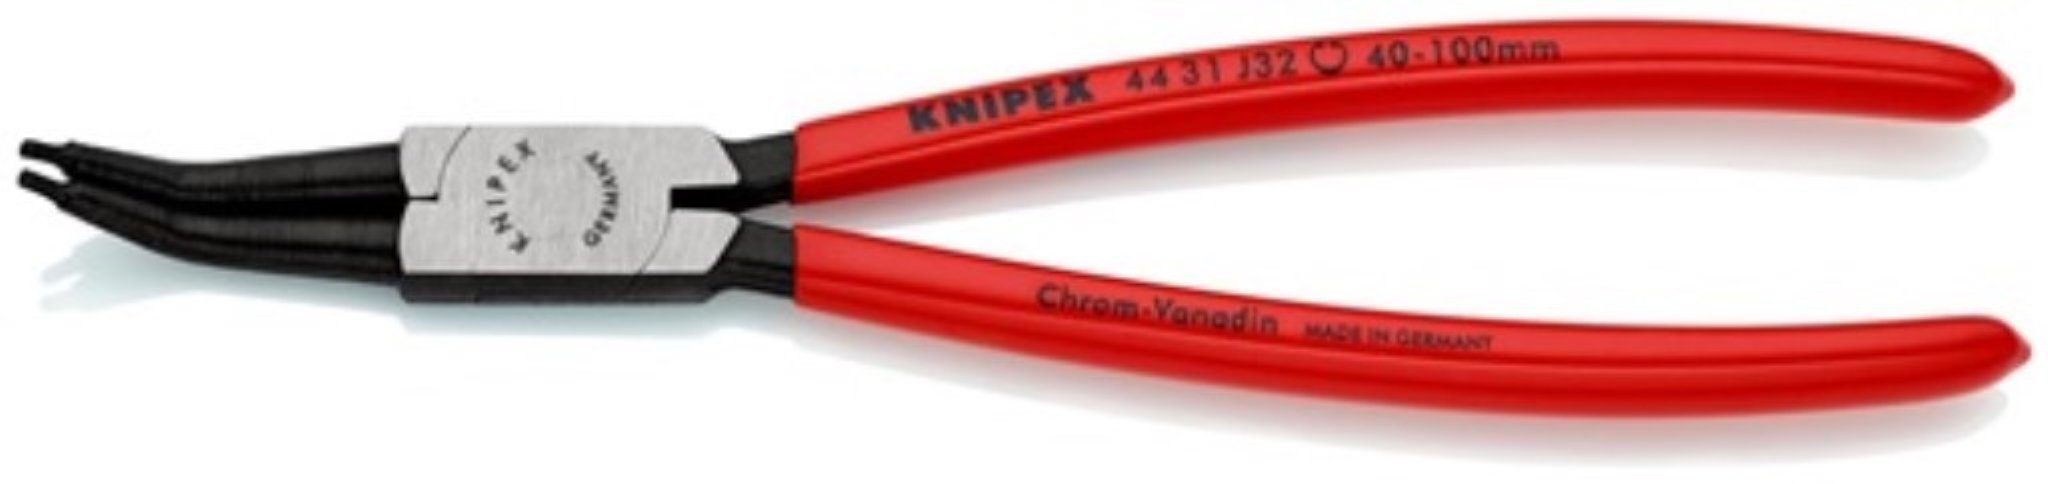 Knipex Sicherungsring Sicherungsringzange Innenringe f.Bohrungen J für D.40-100mm KNIPEX 32